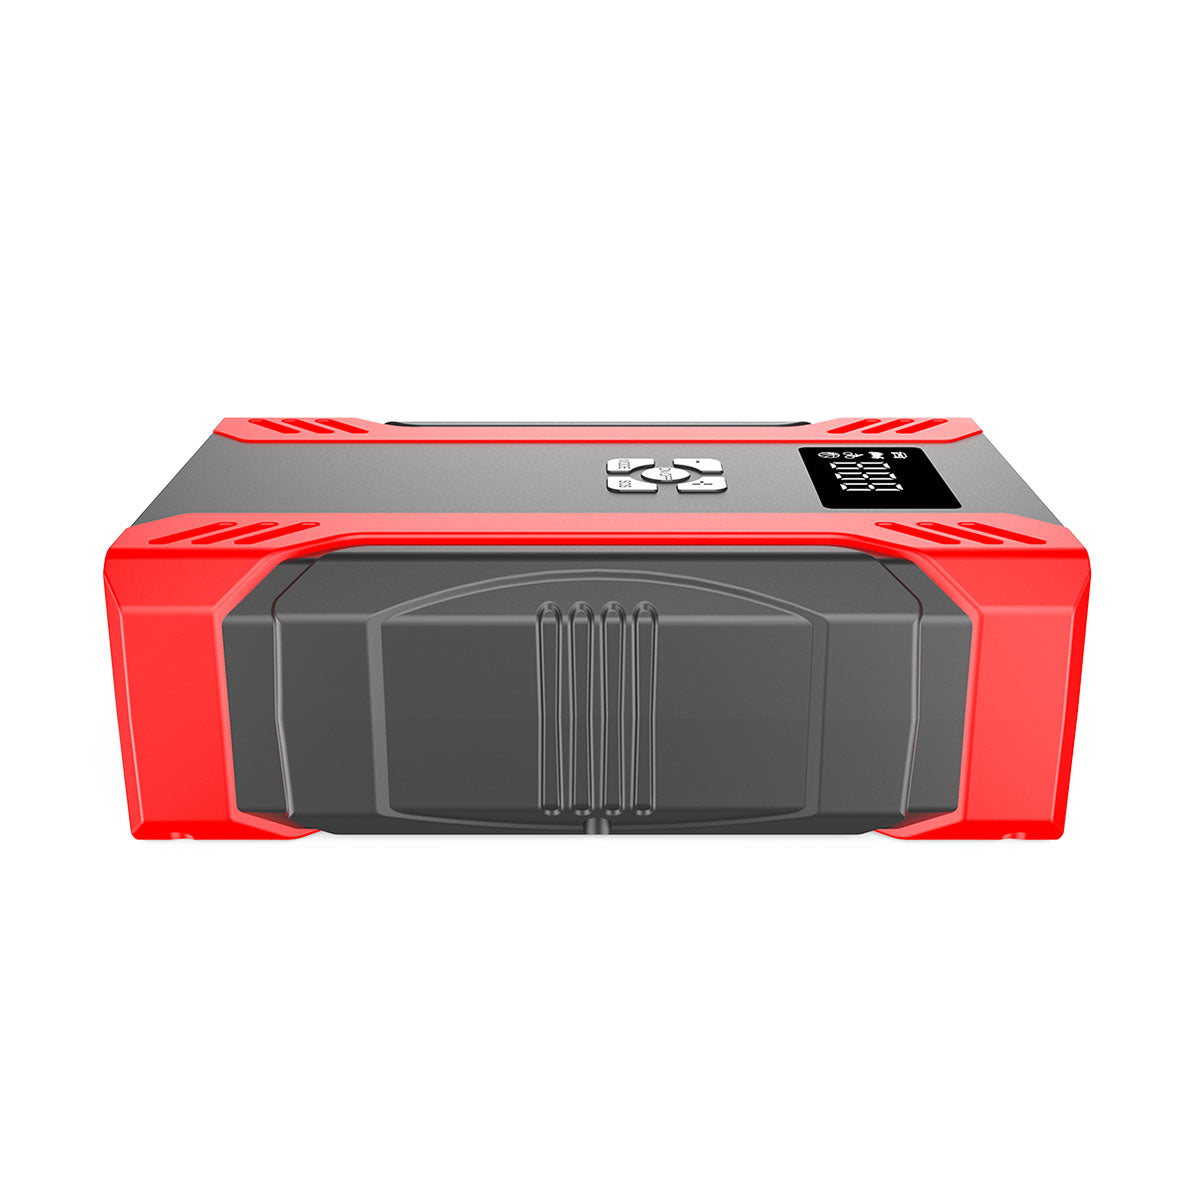 New Universal Portable Jump Starter & Air Pump 12V Power Bank Multi-function Lithium Battery SOS illuminator For All USA 12V Vehicles In USA